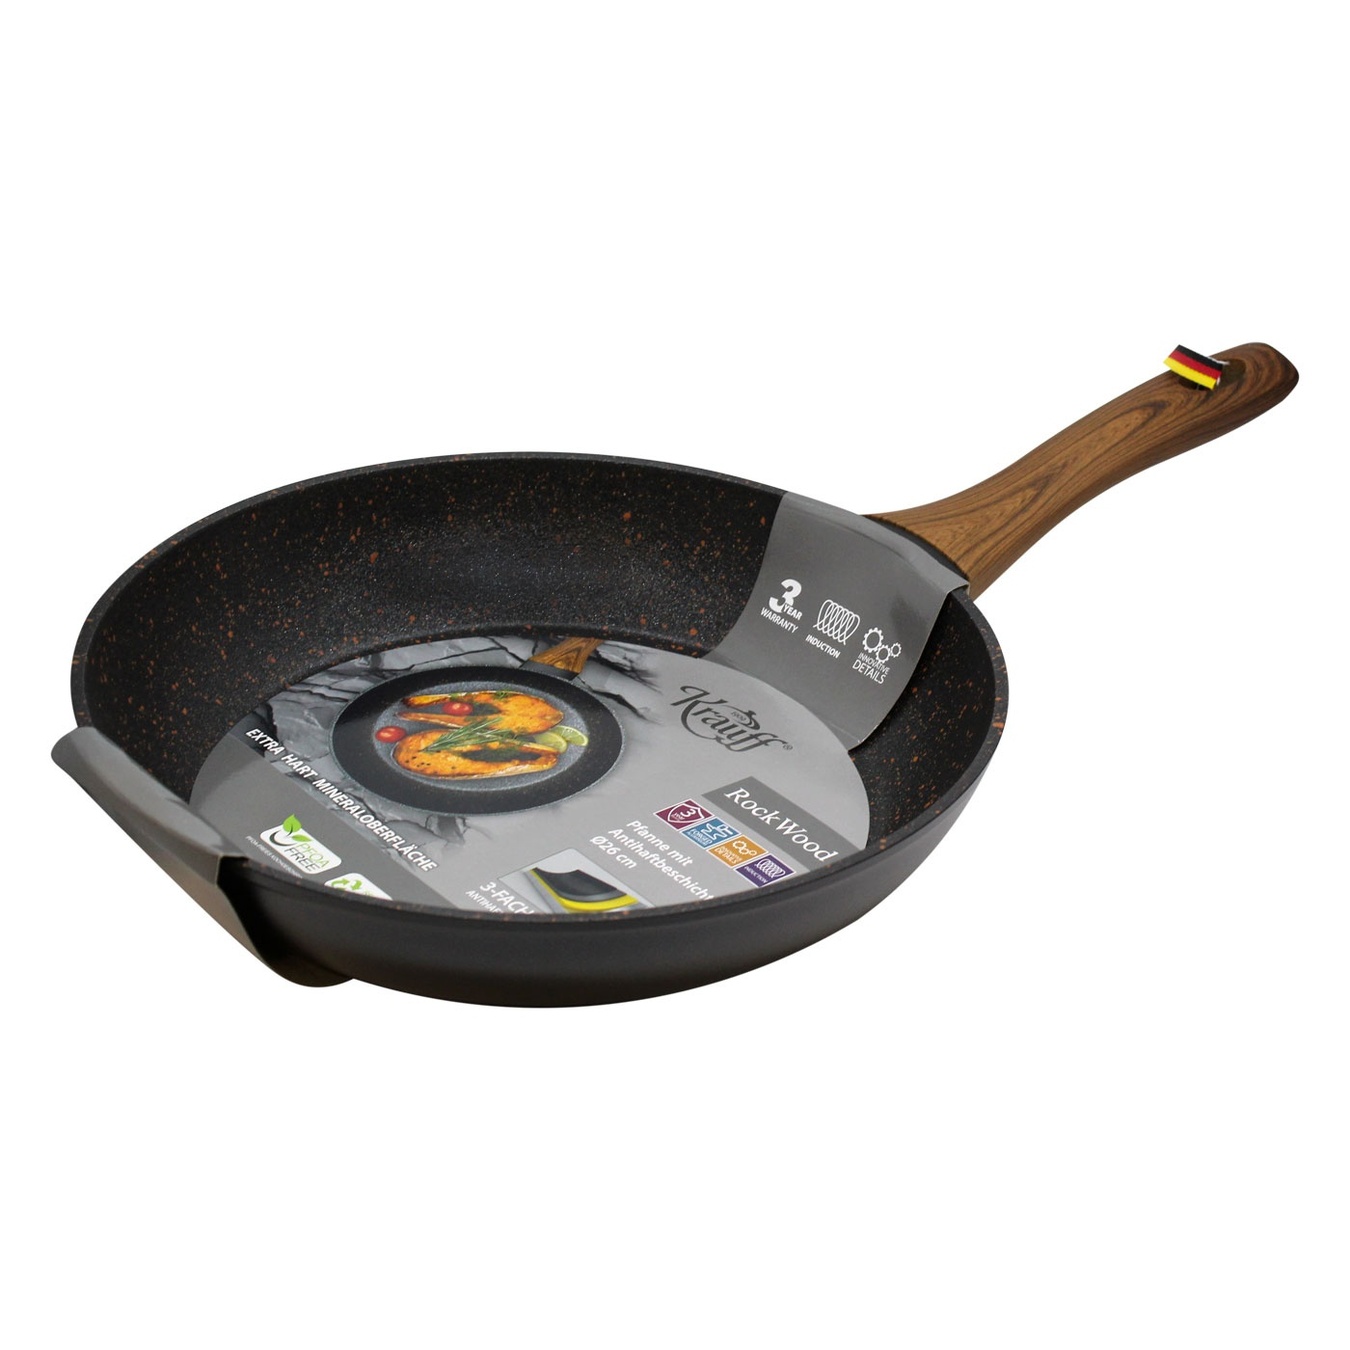 Krauff Megastone aluminum frying pan with non-stick relief coating 26 cm